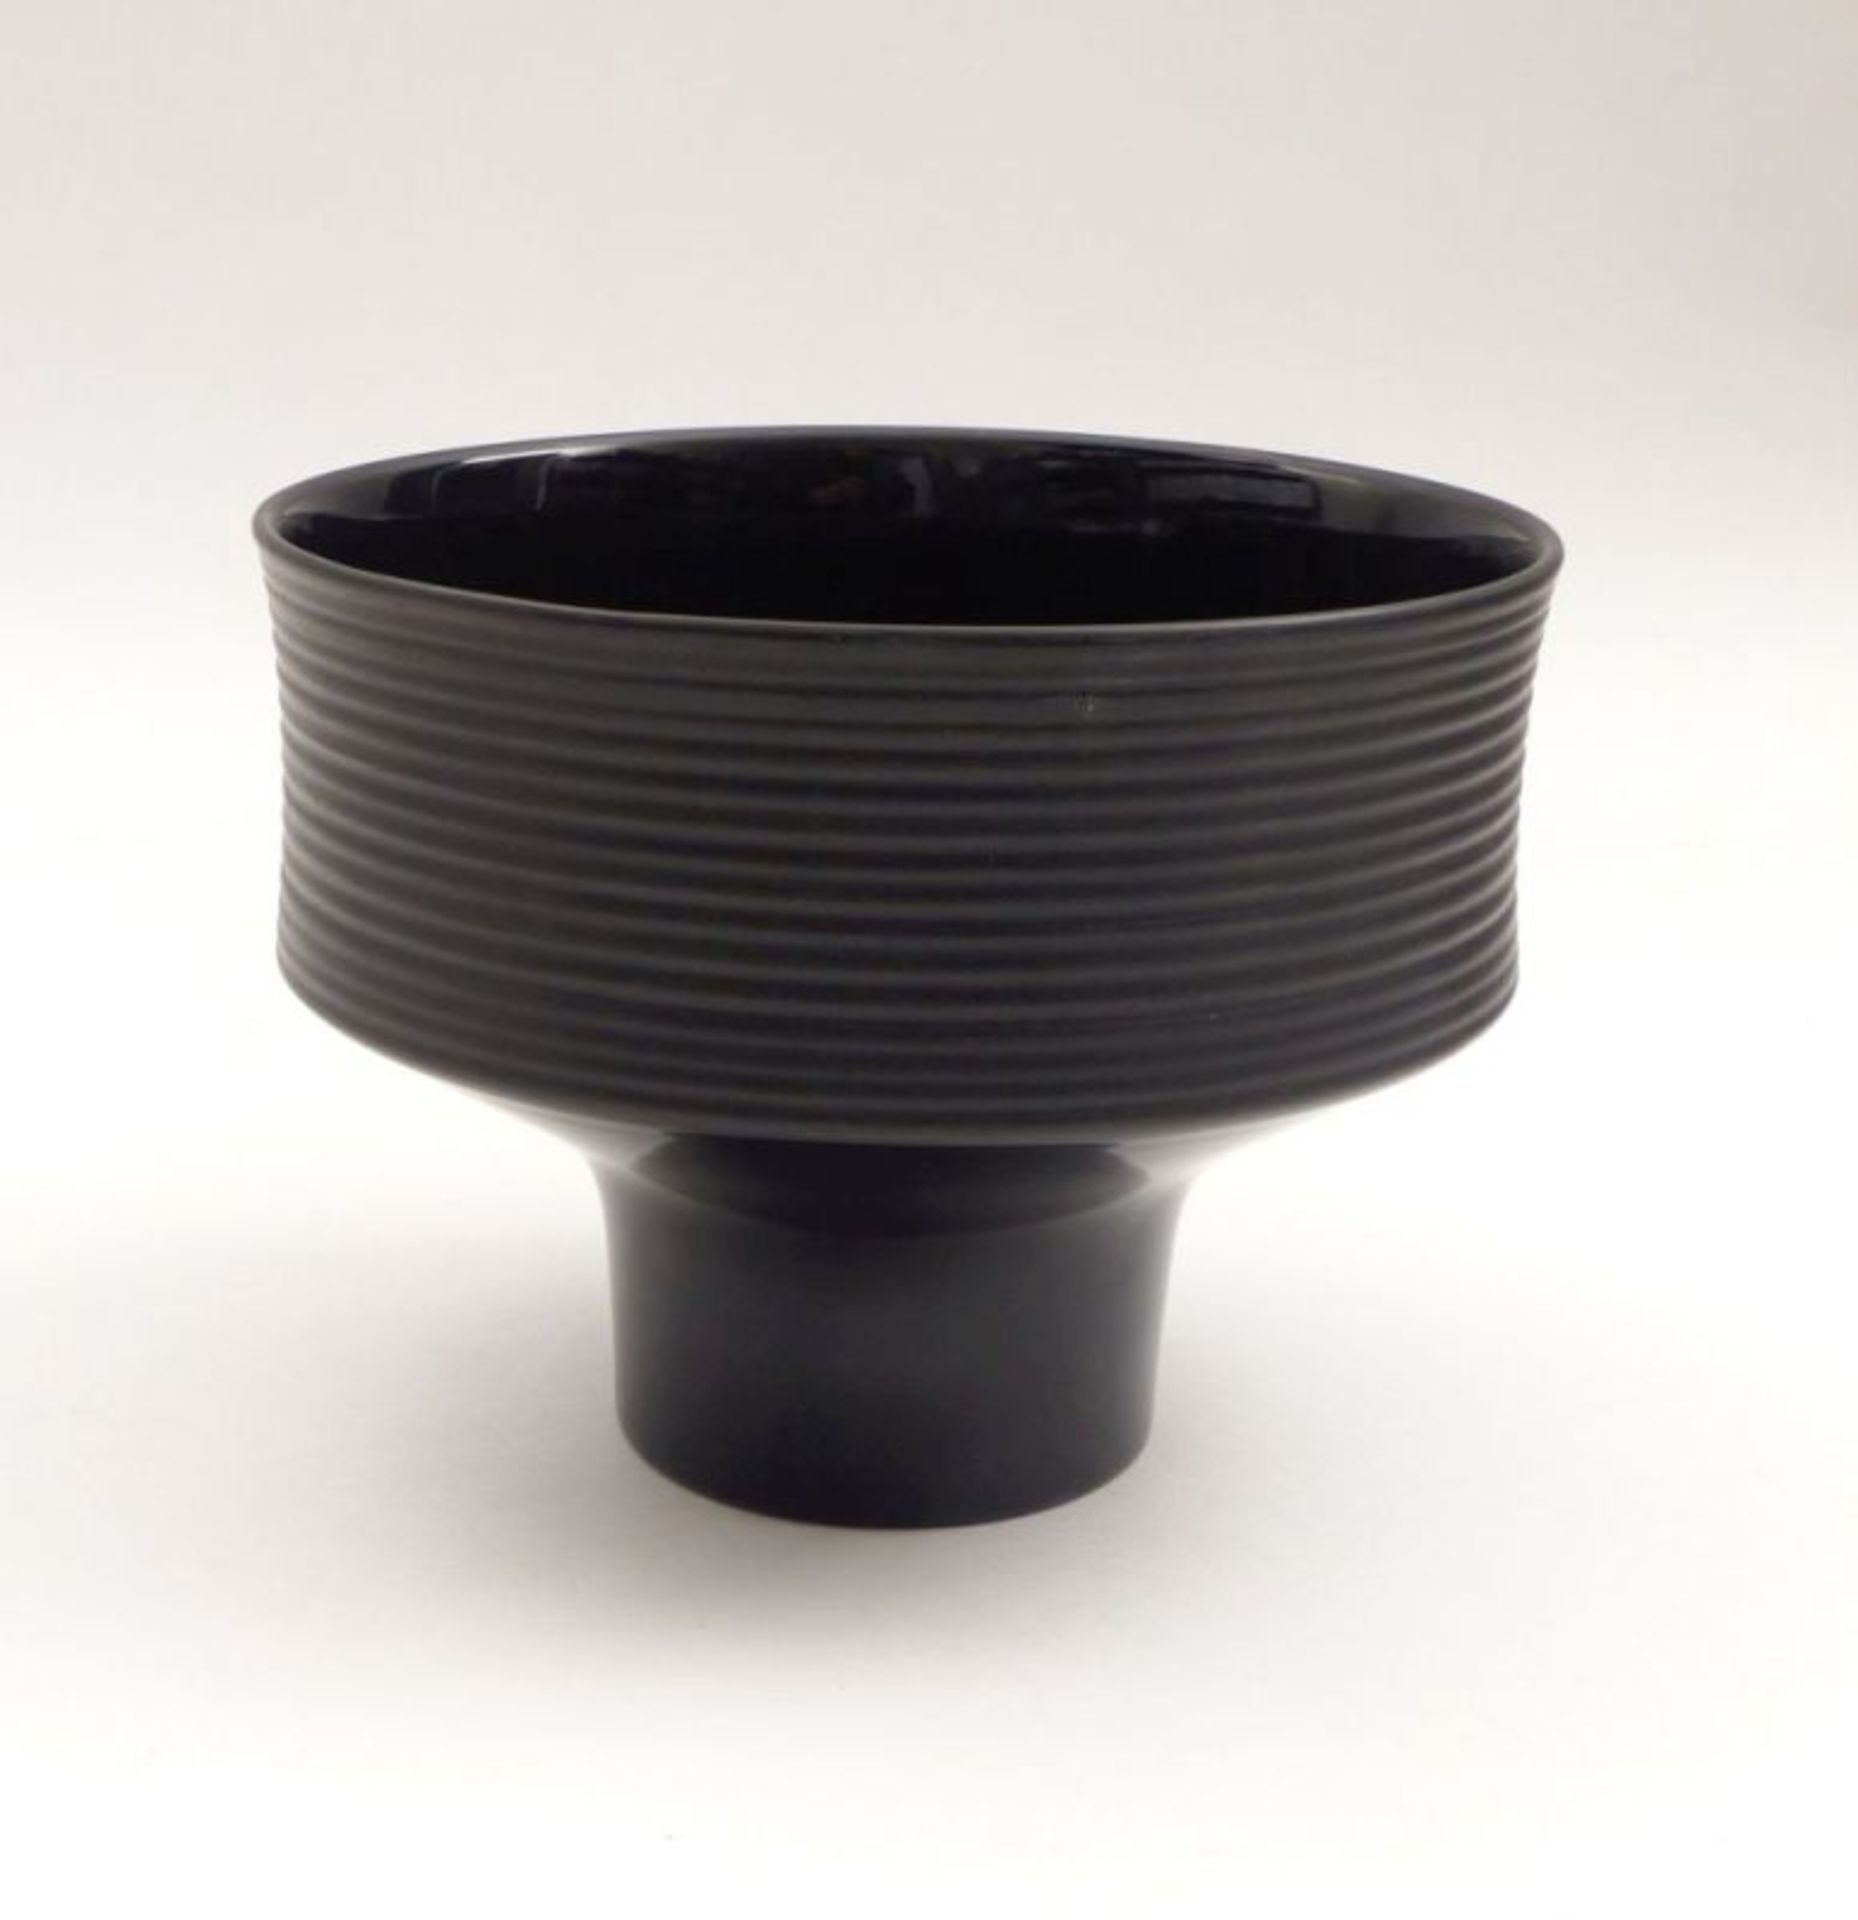 Wirkkala, Tapio''Porcelaine noire''- bowl(Hanko 1915-1985 Helsinki) For Rosenthal, studio line, - Bild 3 aus 4